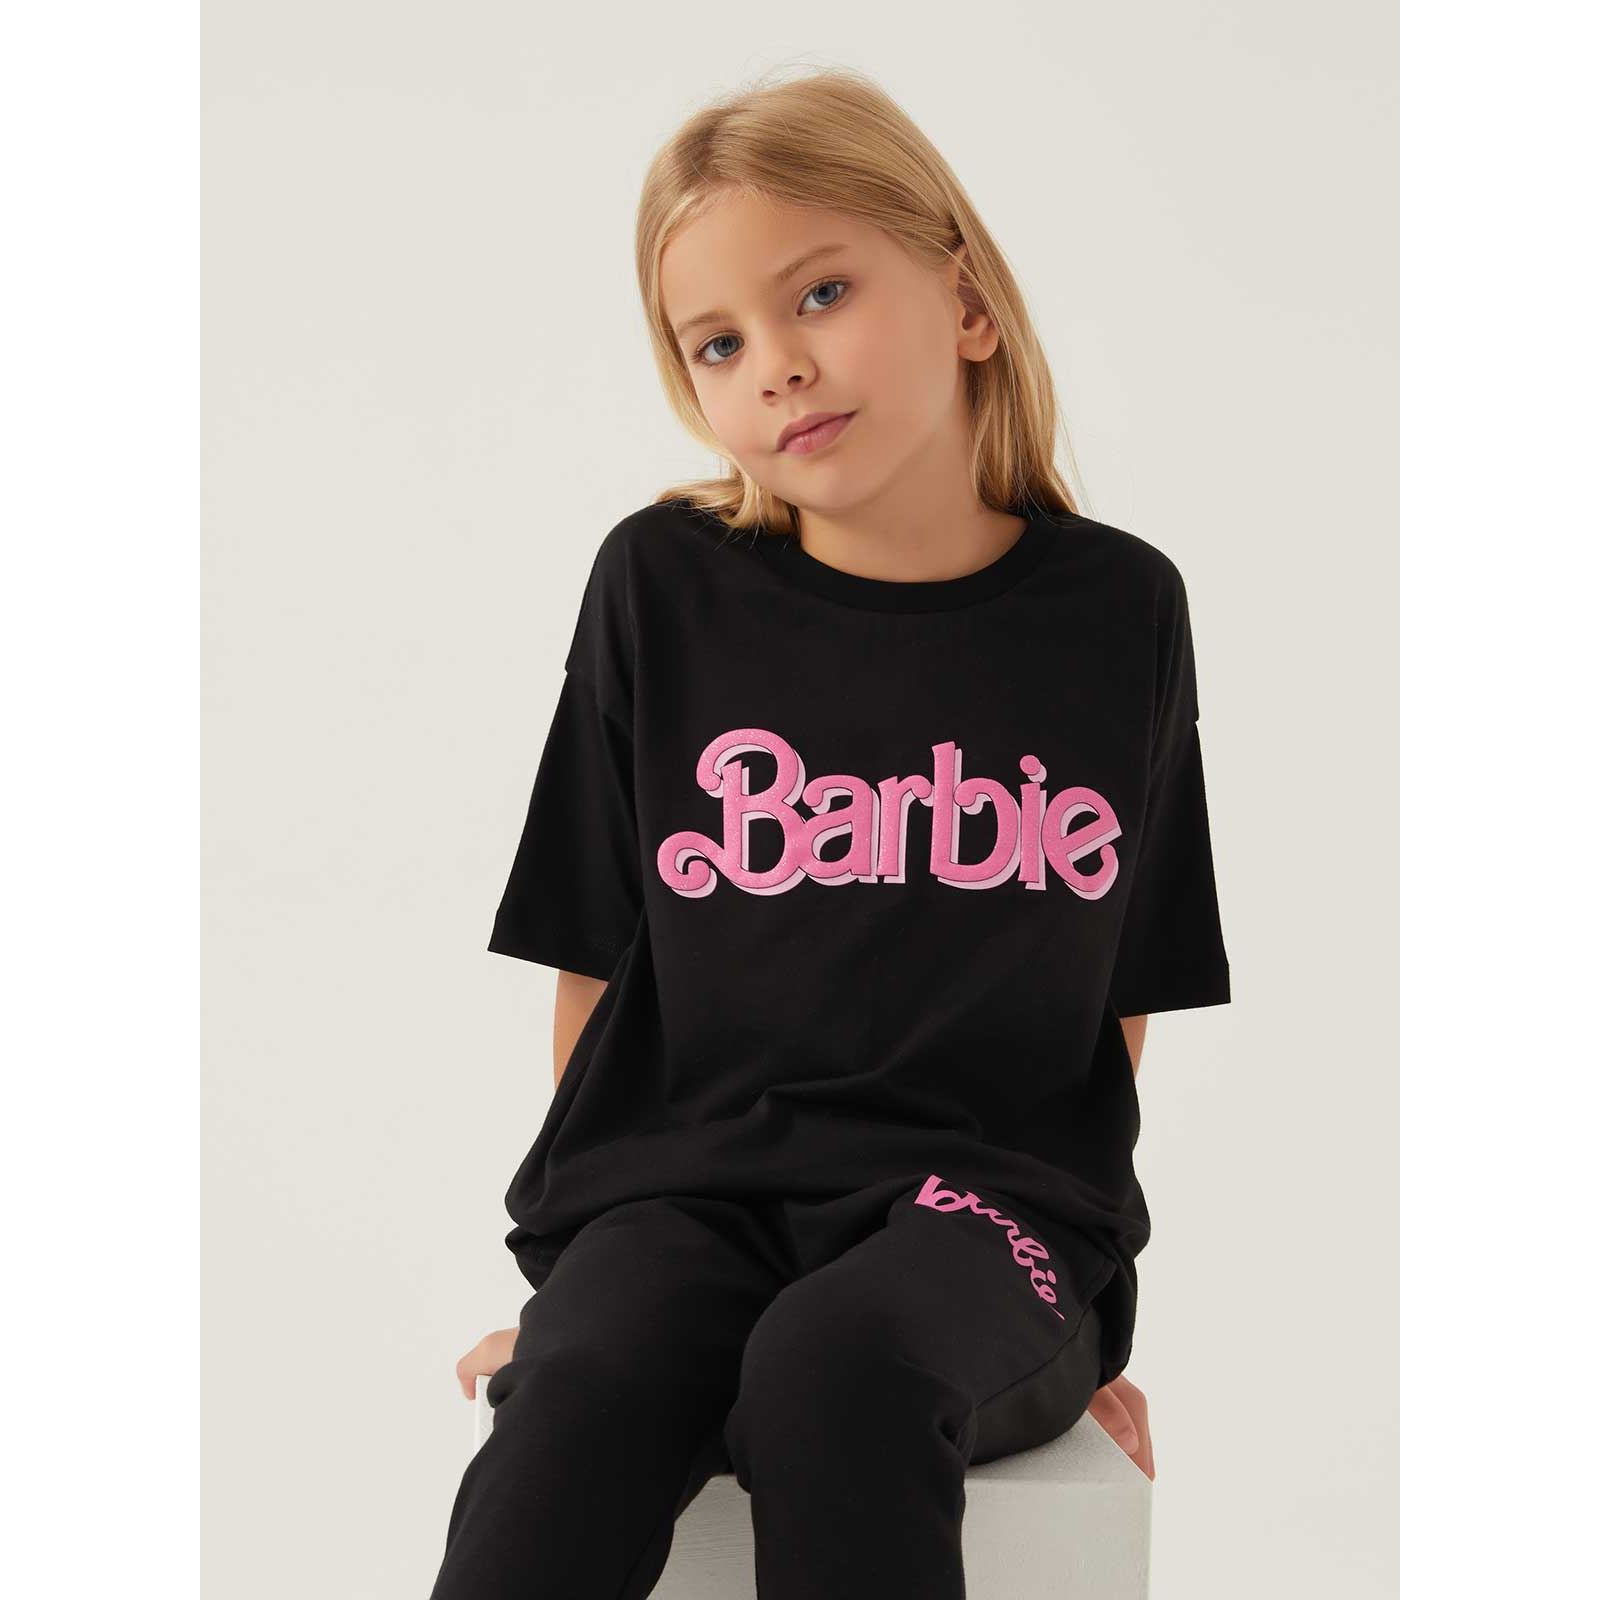 Barbie Kız Çocuk Tişört 9-14 Yaş Siyah